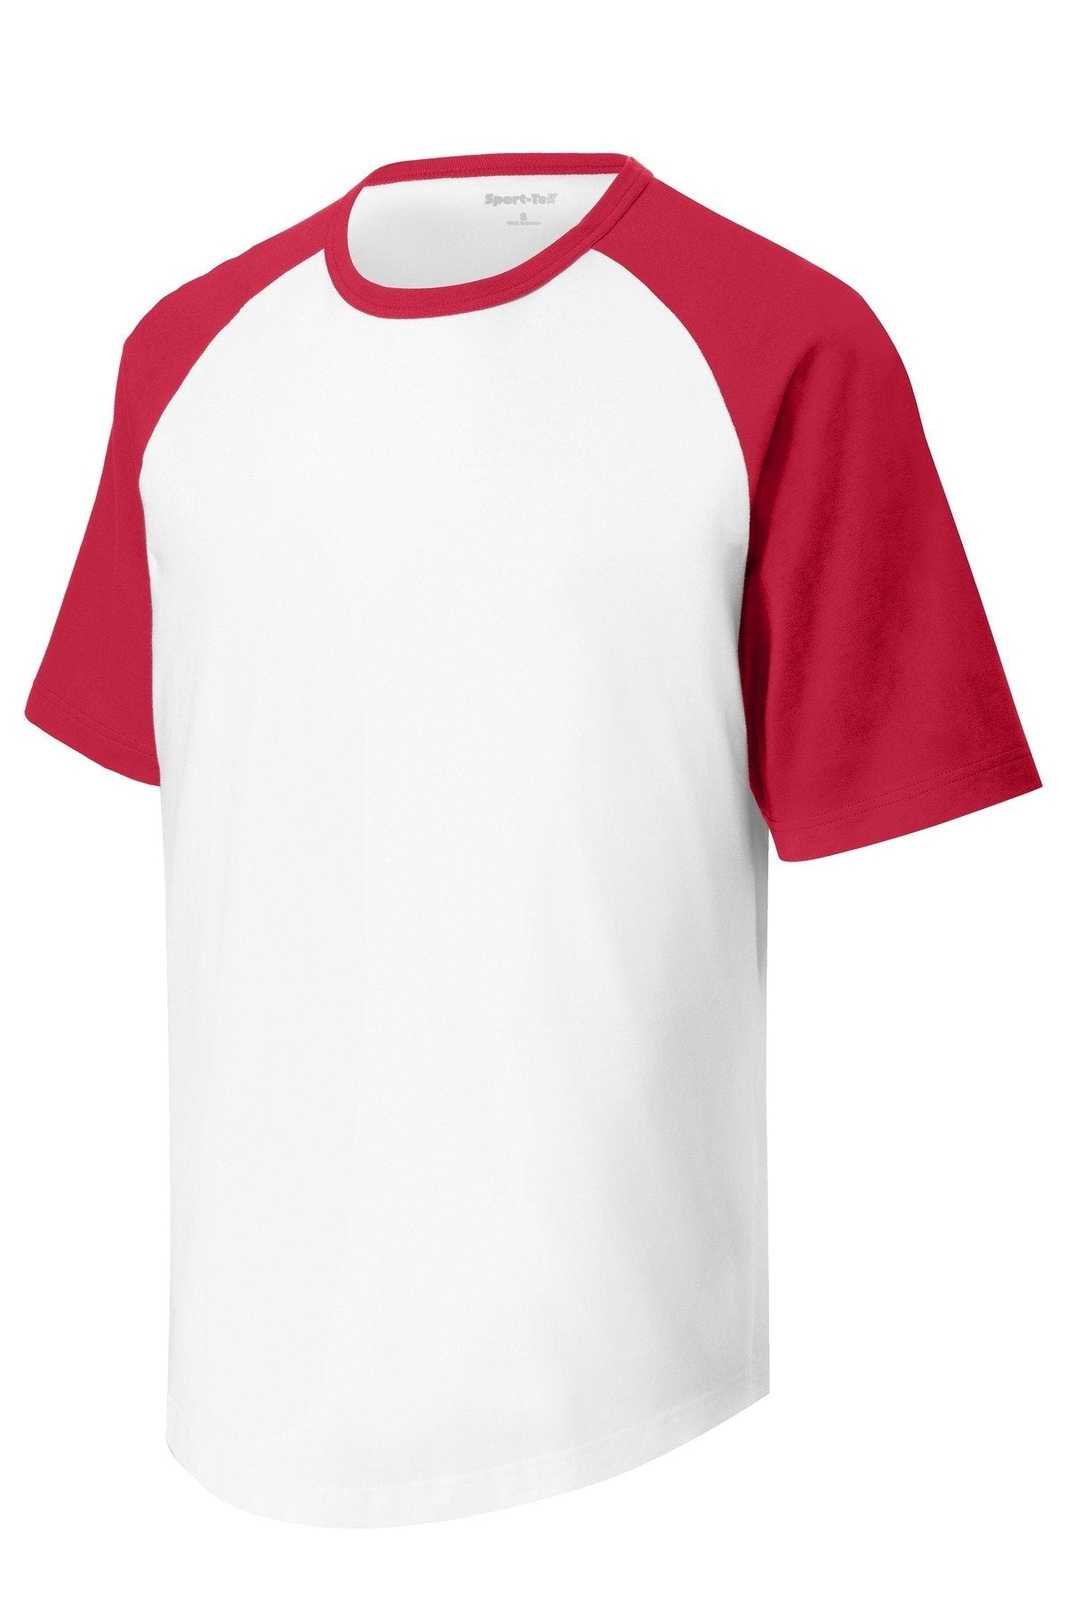 Sport-Tek T201 Short Sleeve Colorblock Raglan Jersey - White Red - HIT a Double - 1